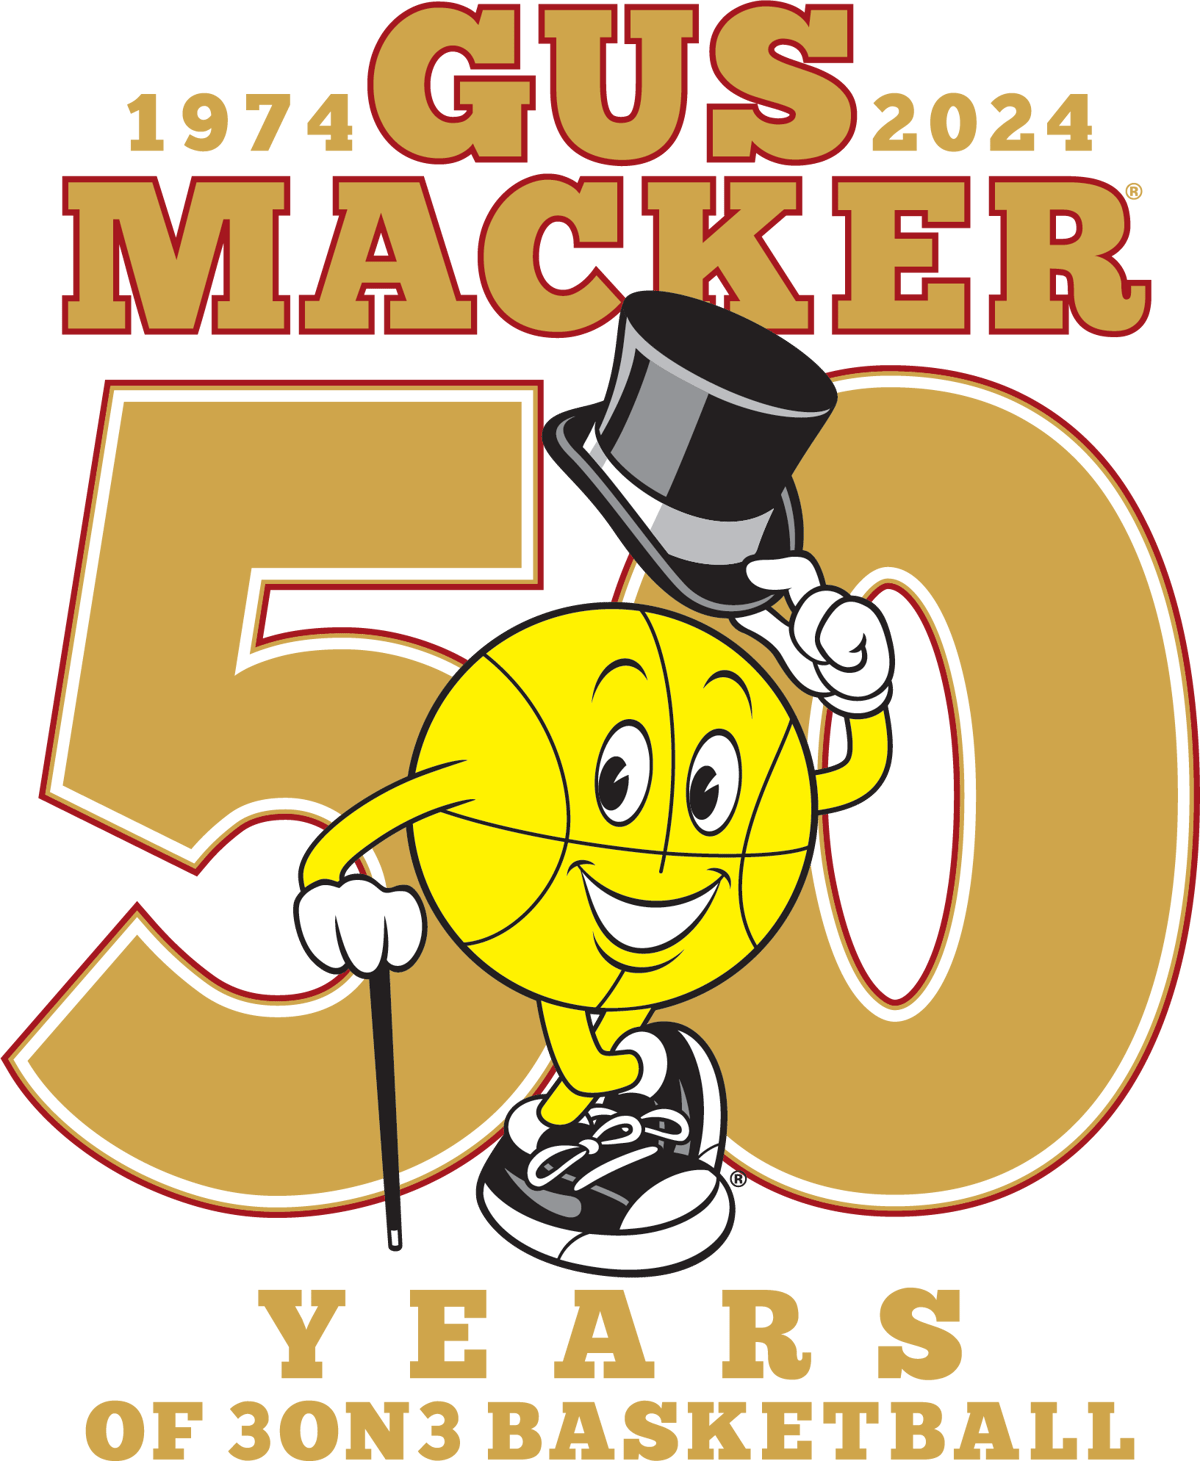 Gus Macker - Midland Michigan (Aug 12-23)